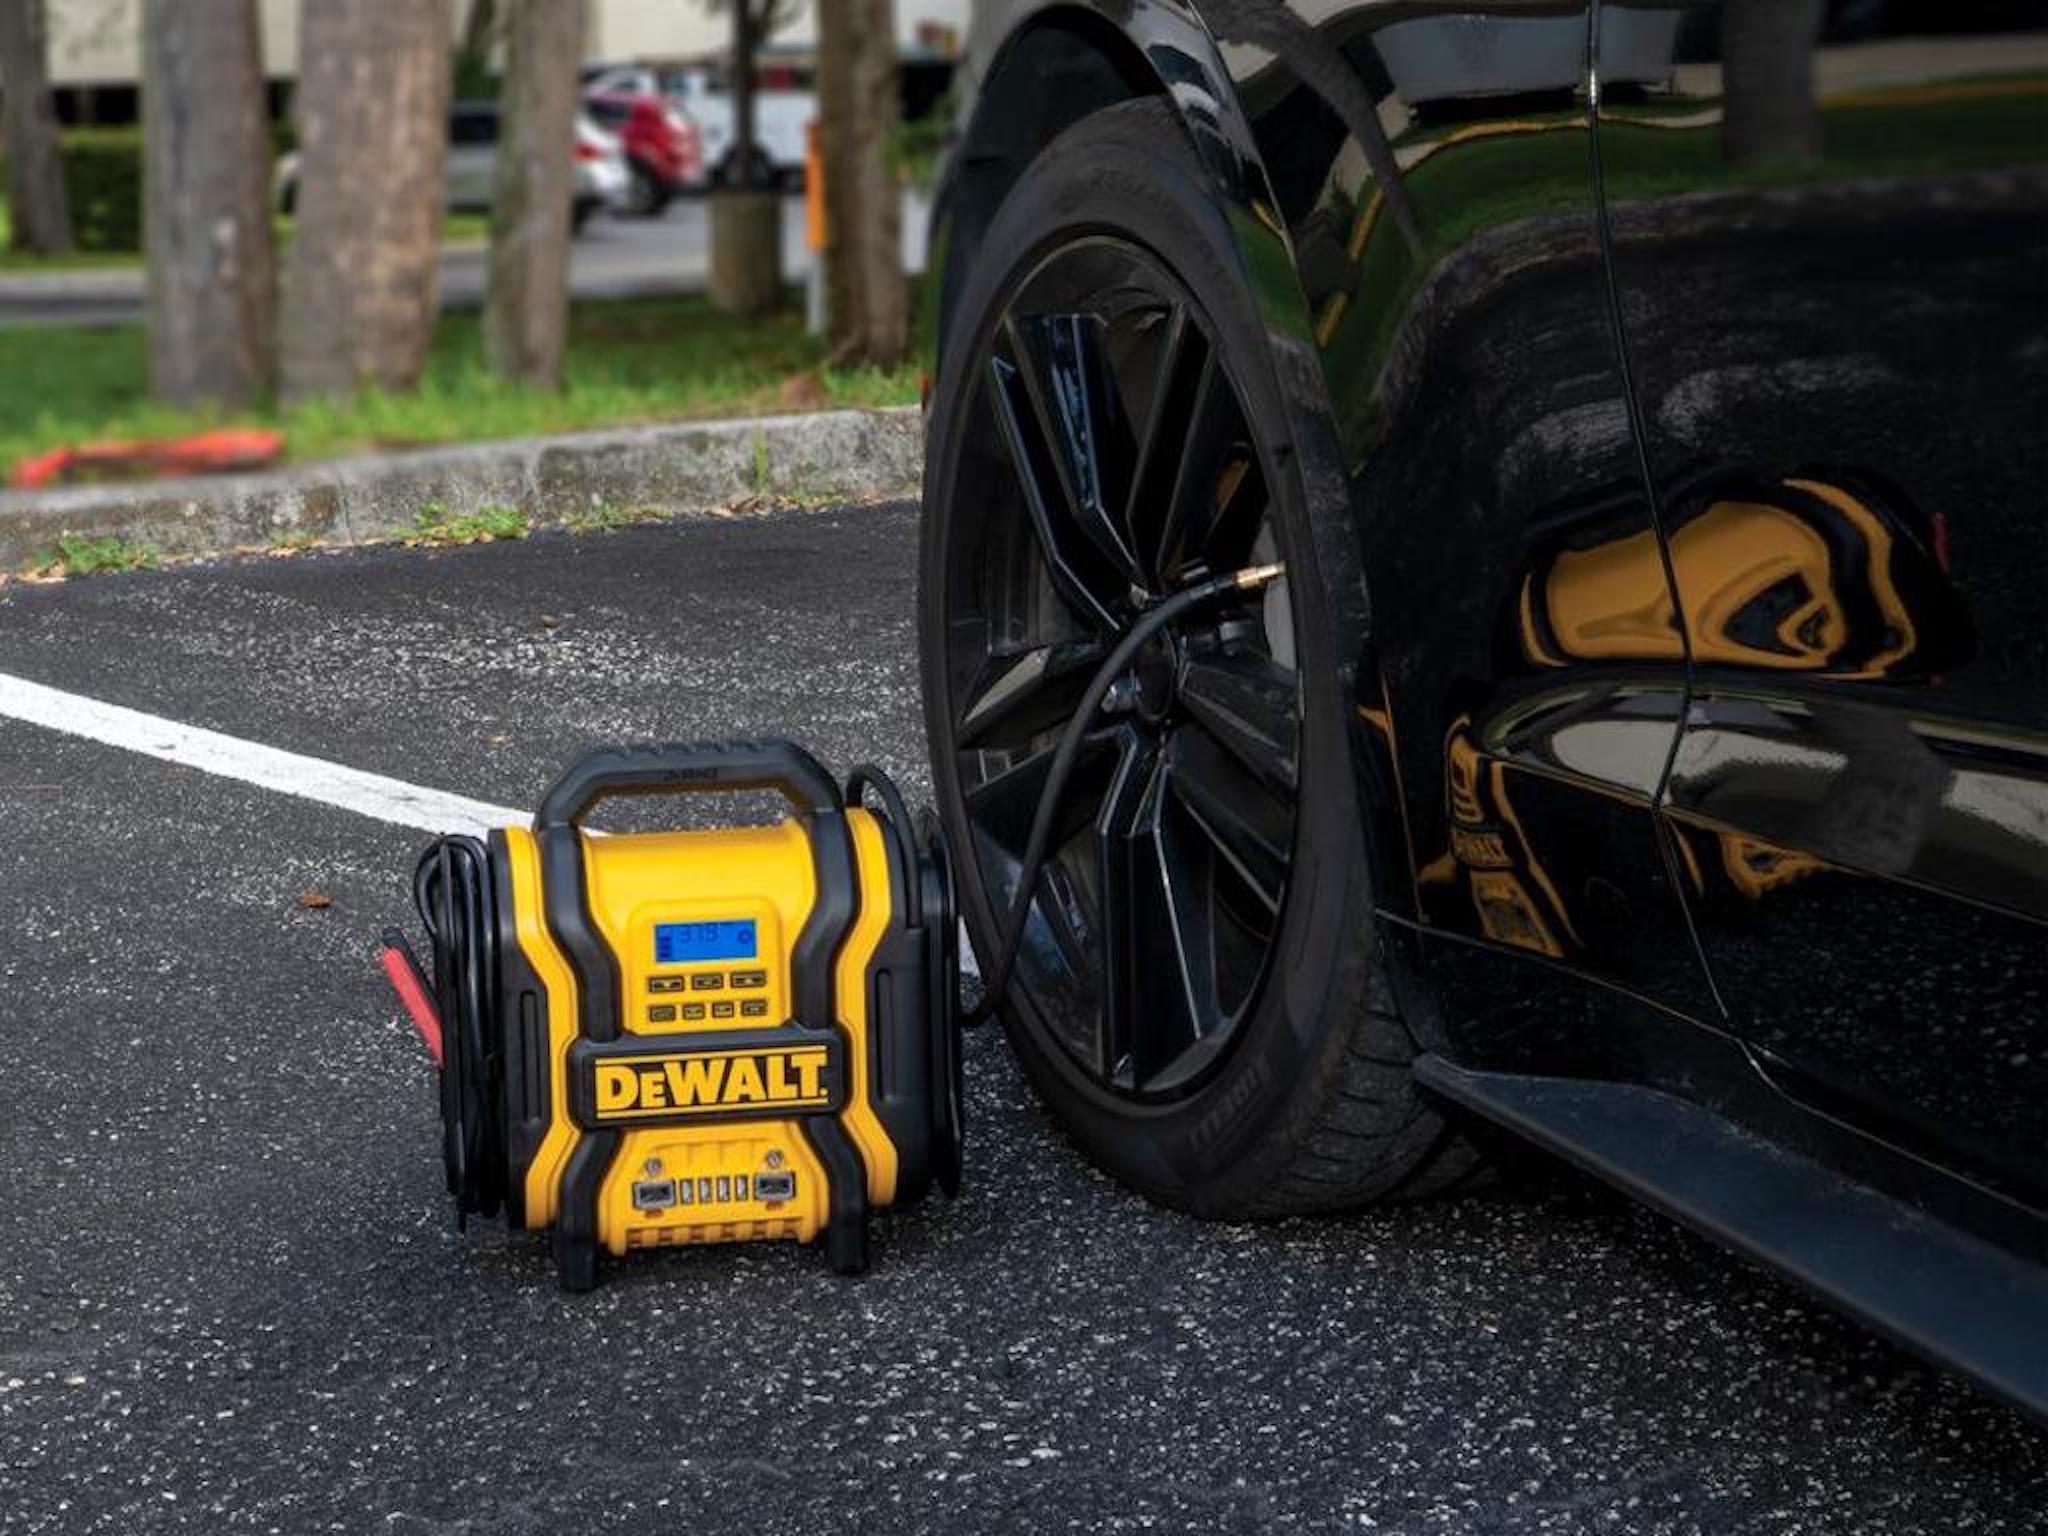 Dewalt Portable Battery Charger Next To Car Lifestyle